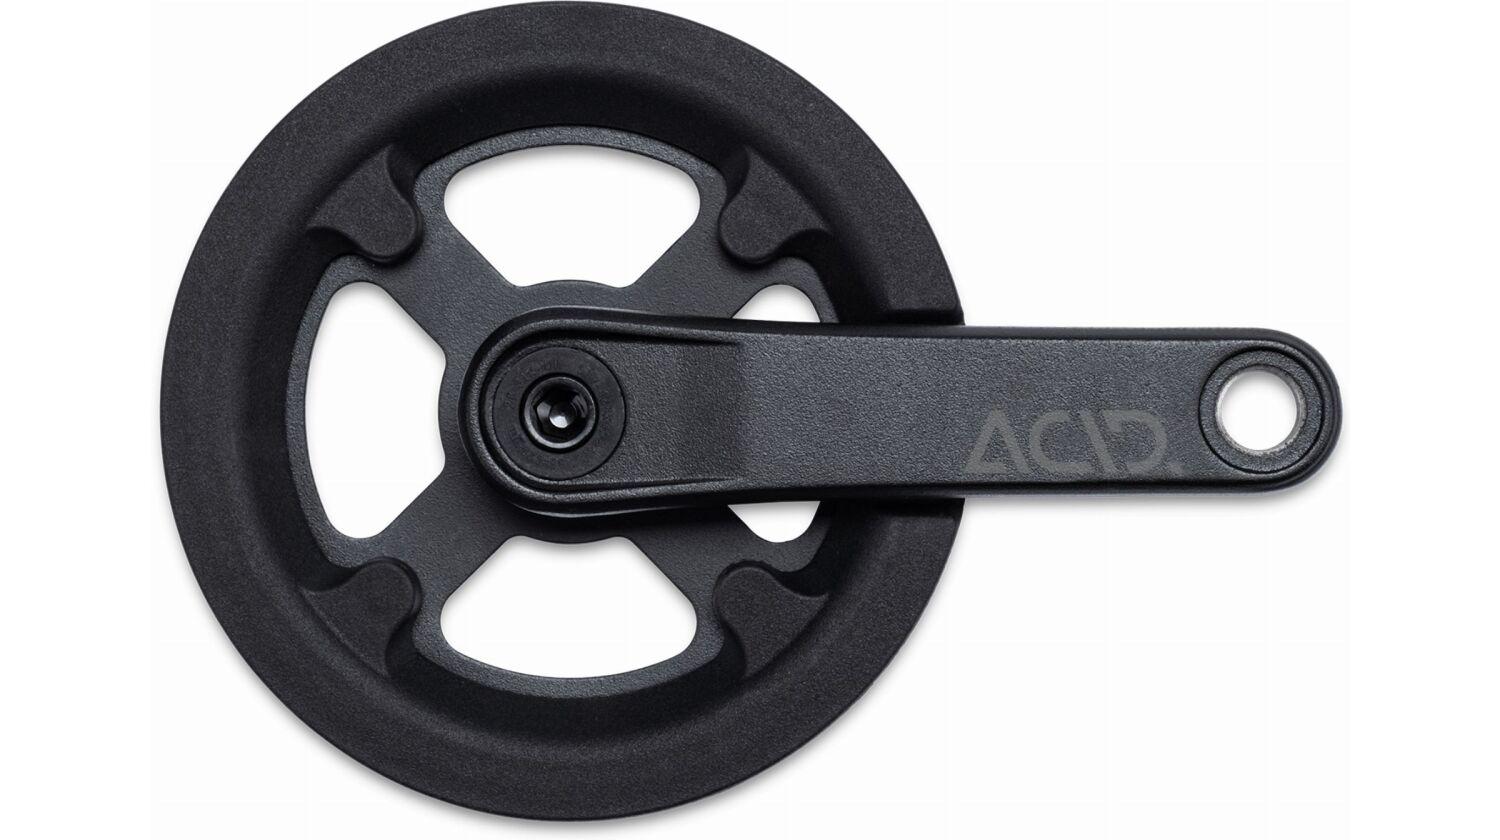 Acid Rookie 30T Kurbelgarnitur Kettenlinie 42 mm black